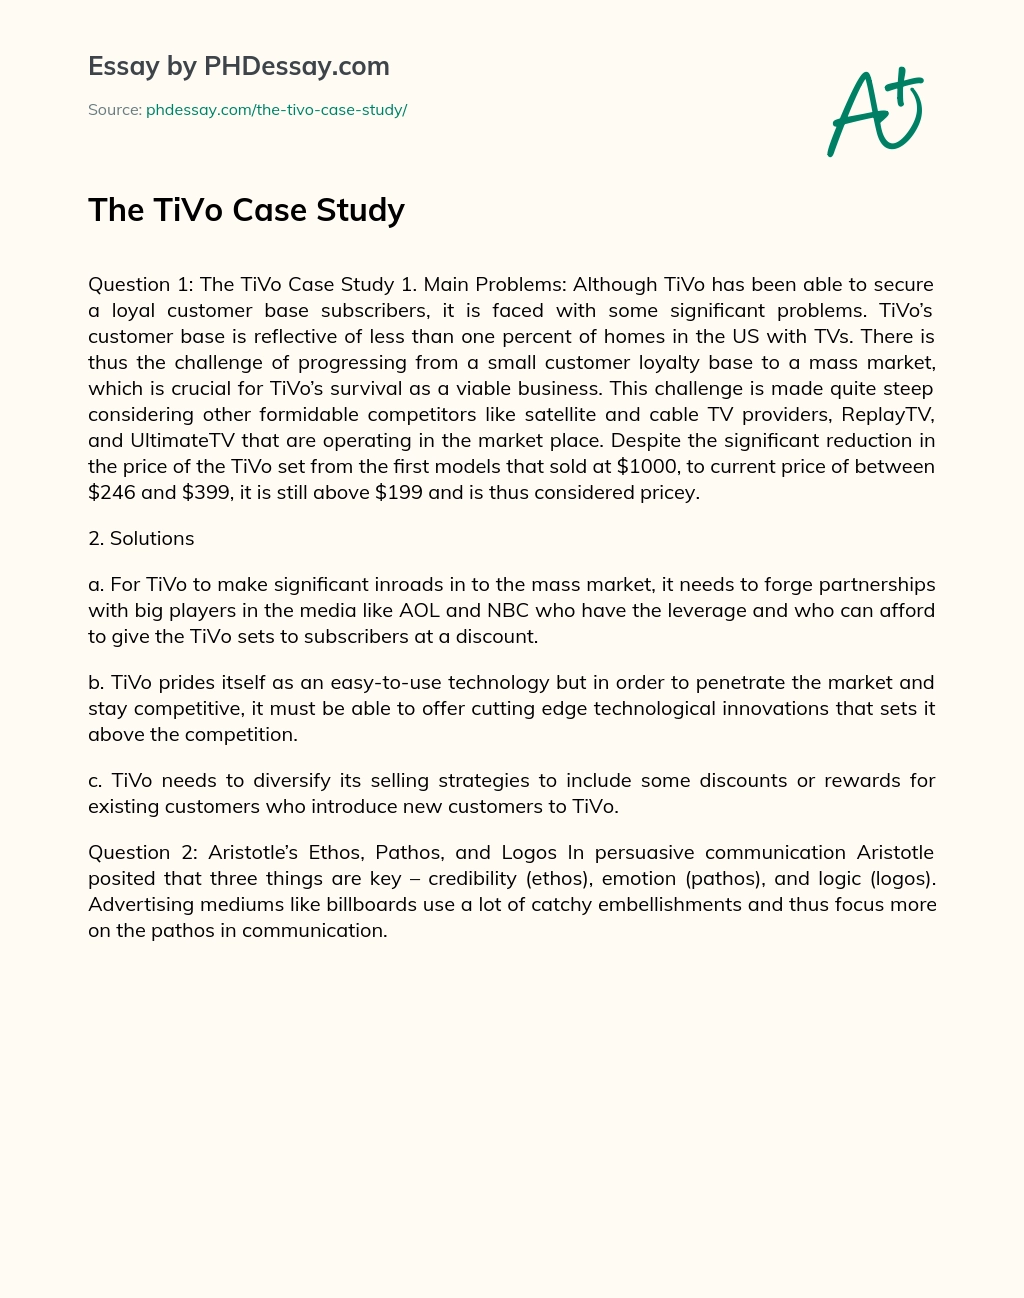 The TiVo Case Study essay